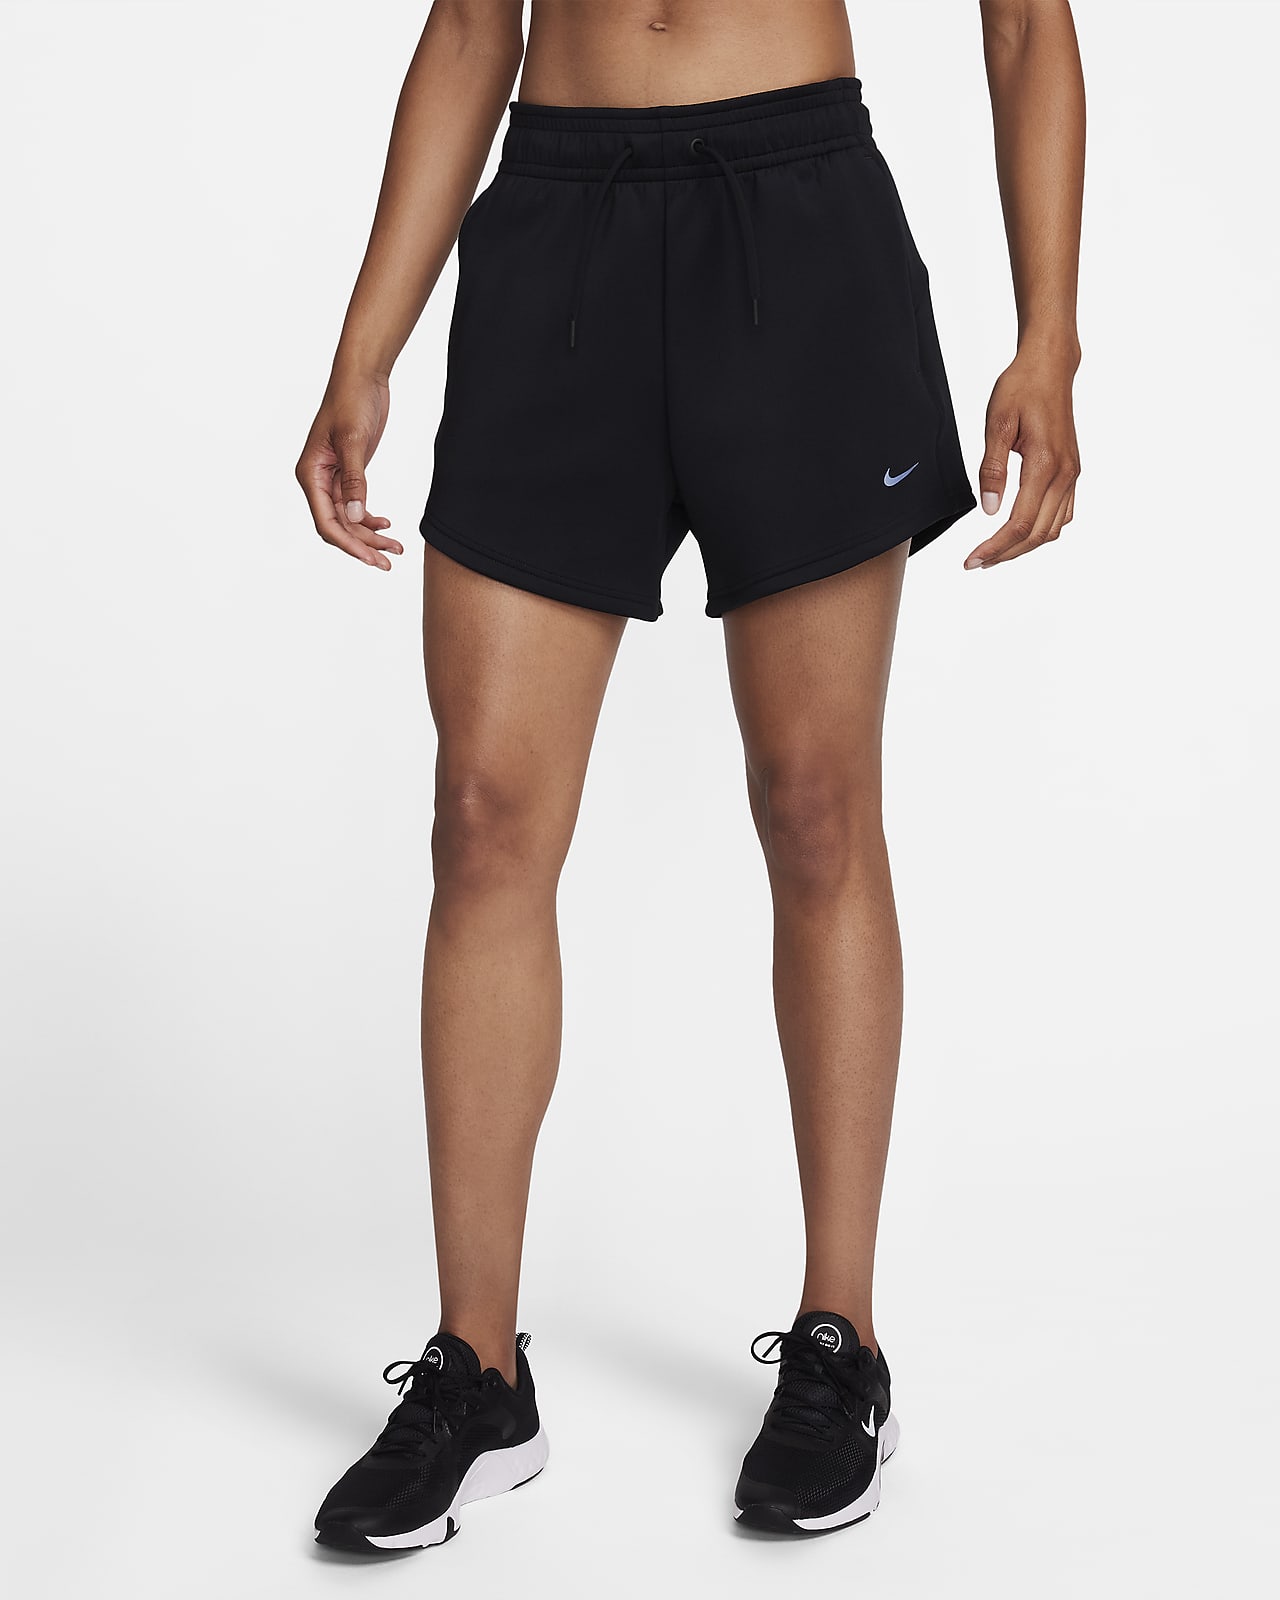 Nike Prima Women's Dri-FIT High-Waisted Shorts.